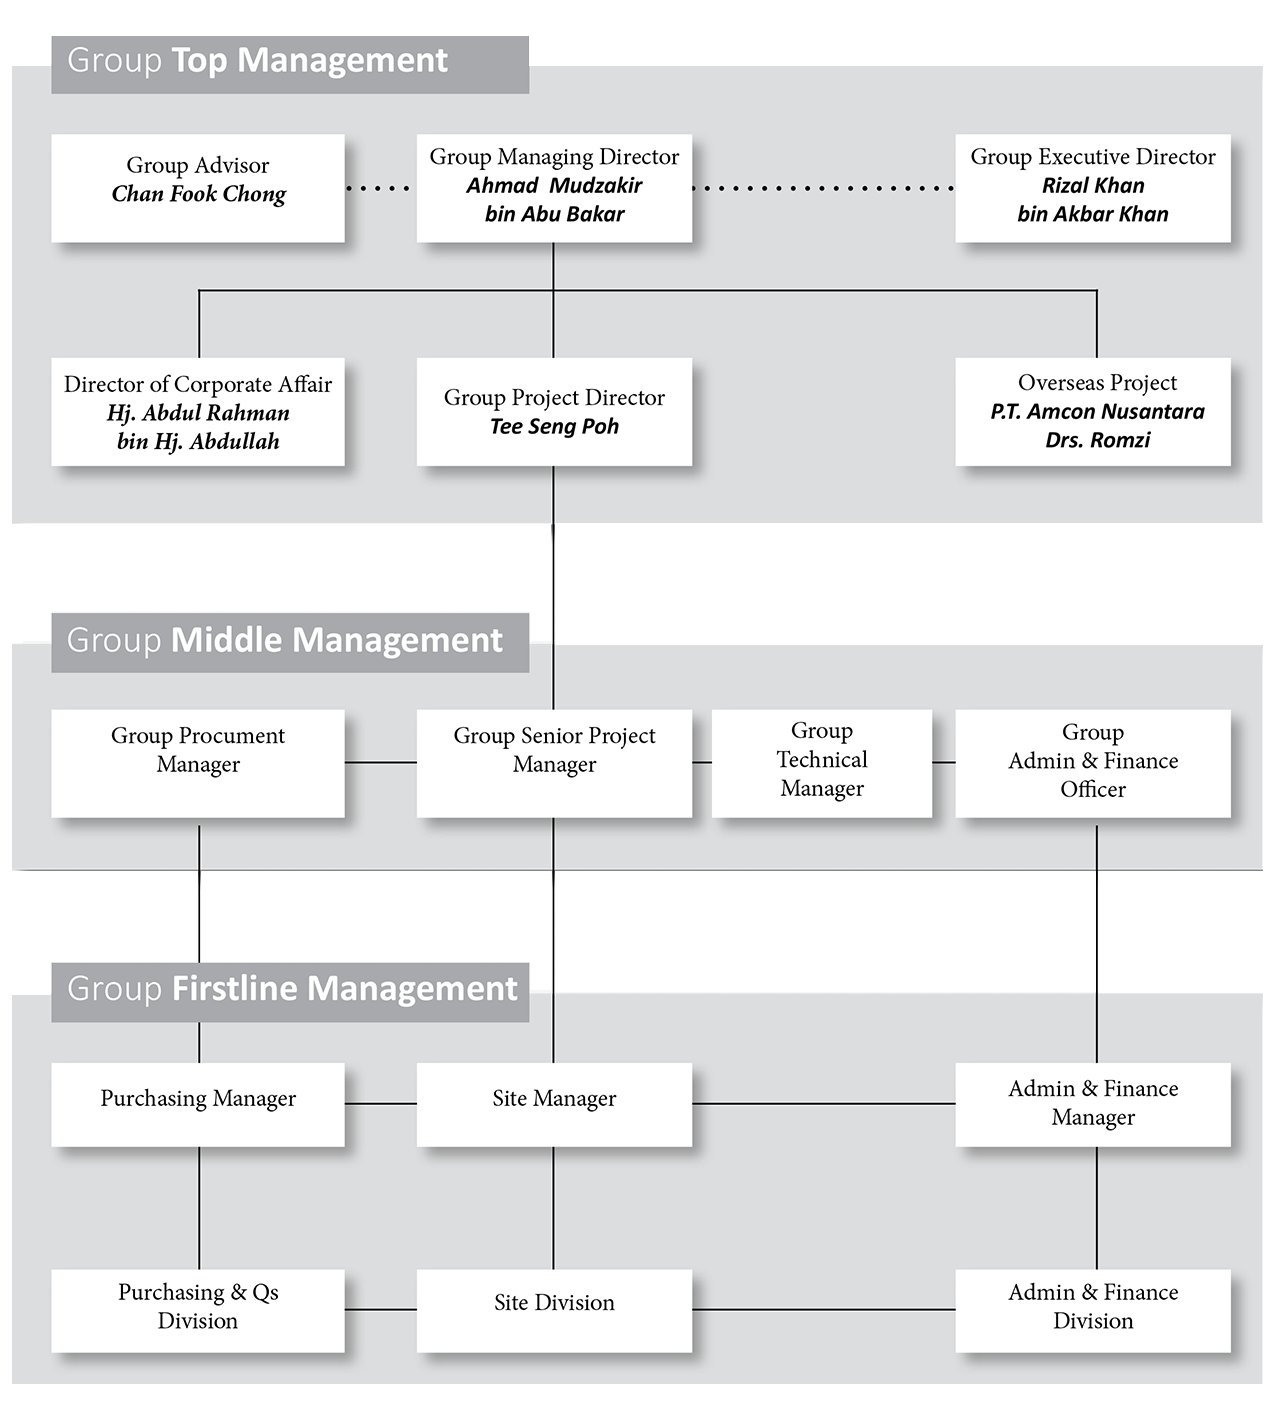 Gamuda Organization Chart